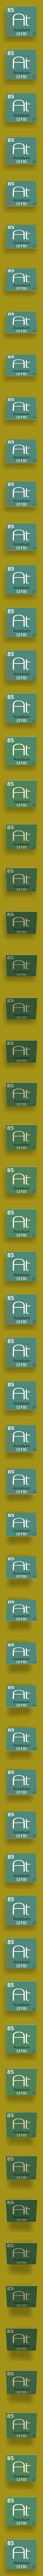 Astatine element #85/118